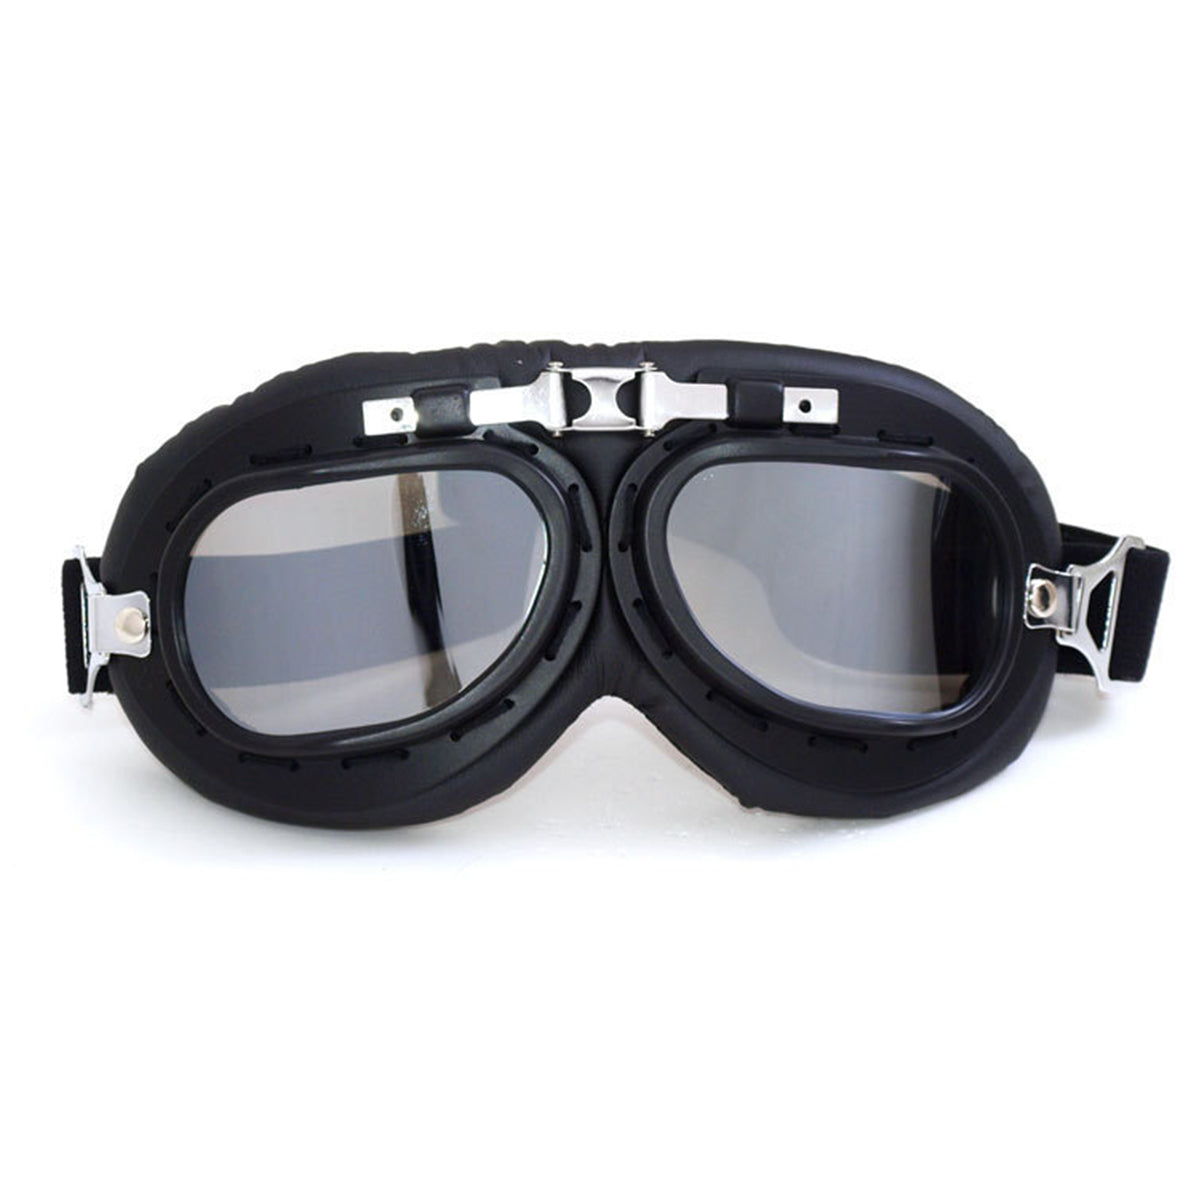 Dark Gray Retro Helmet Goggles Motrocycle Scooter Cycling Riding Eyewear Glasses Adult